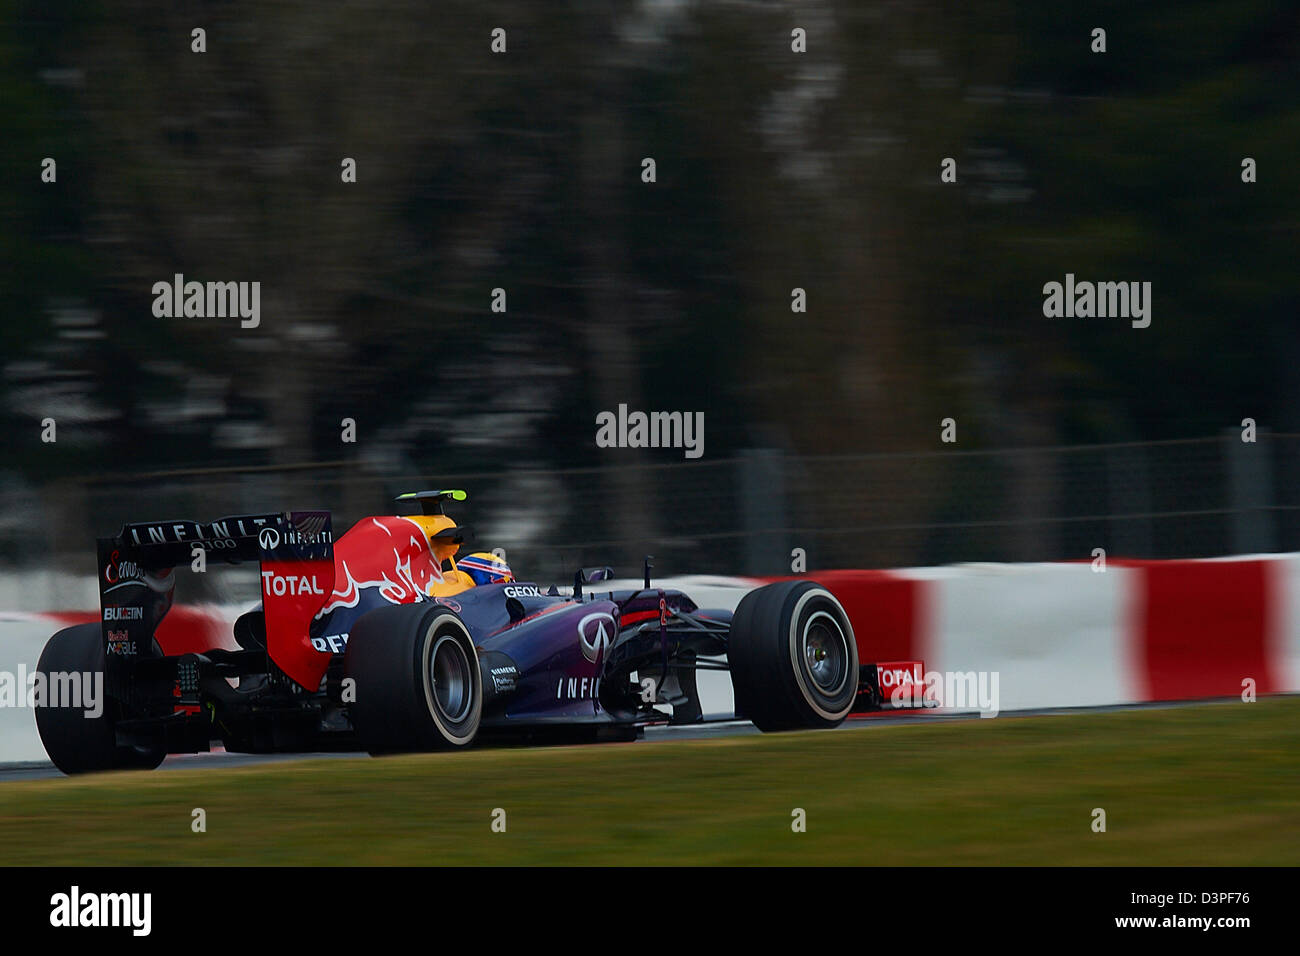 Barcelona, Spanien. 22. Februar 2013.   Mark Webber (Red Bull Racing) fährt im Formel1 Winter testen am Circuit de Catalunya. Bildnachweis: Aktion Plus Sportbilder / Alamy Live News Stockfoto